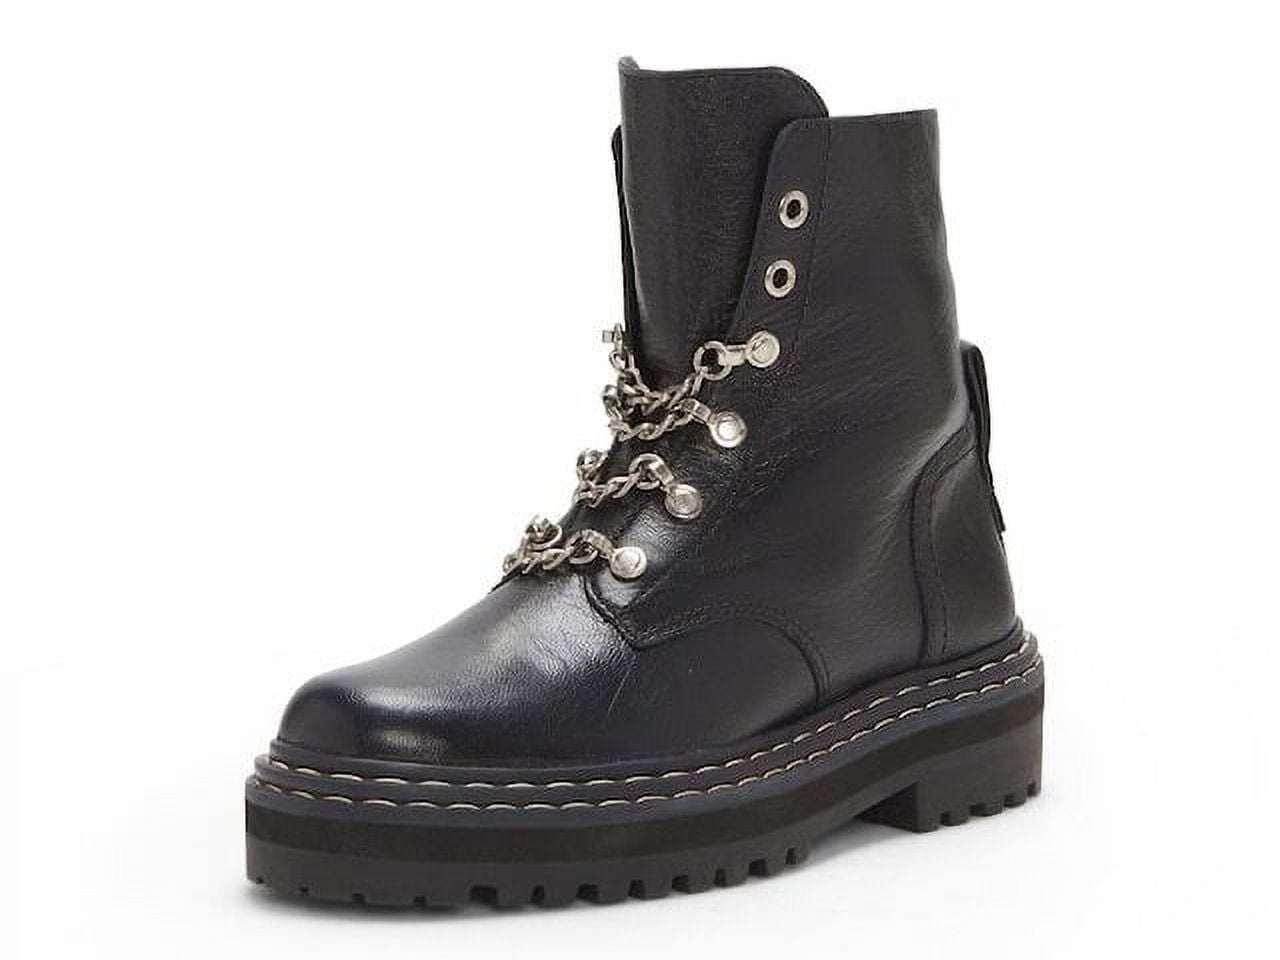 Vince Camuto Popinta Women's Boots Black Size 6 M - Walmart.com